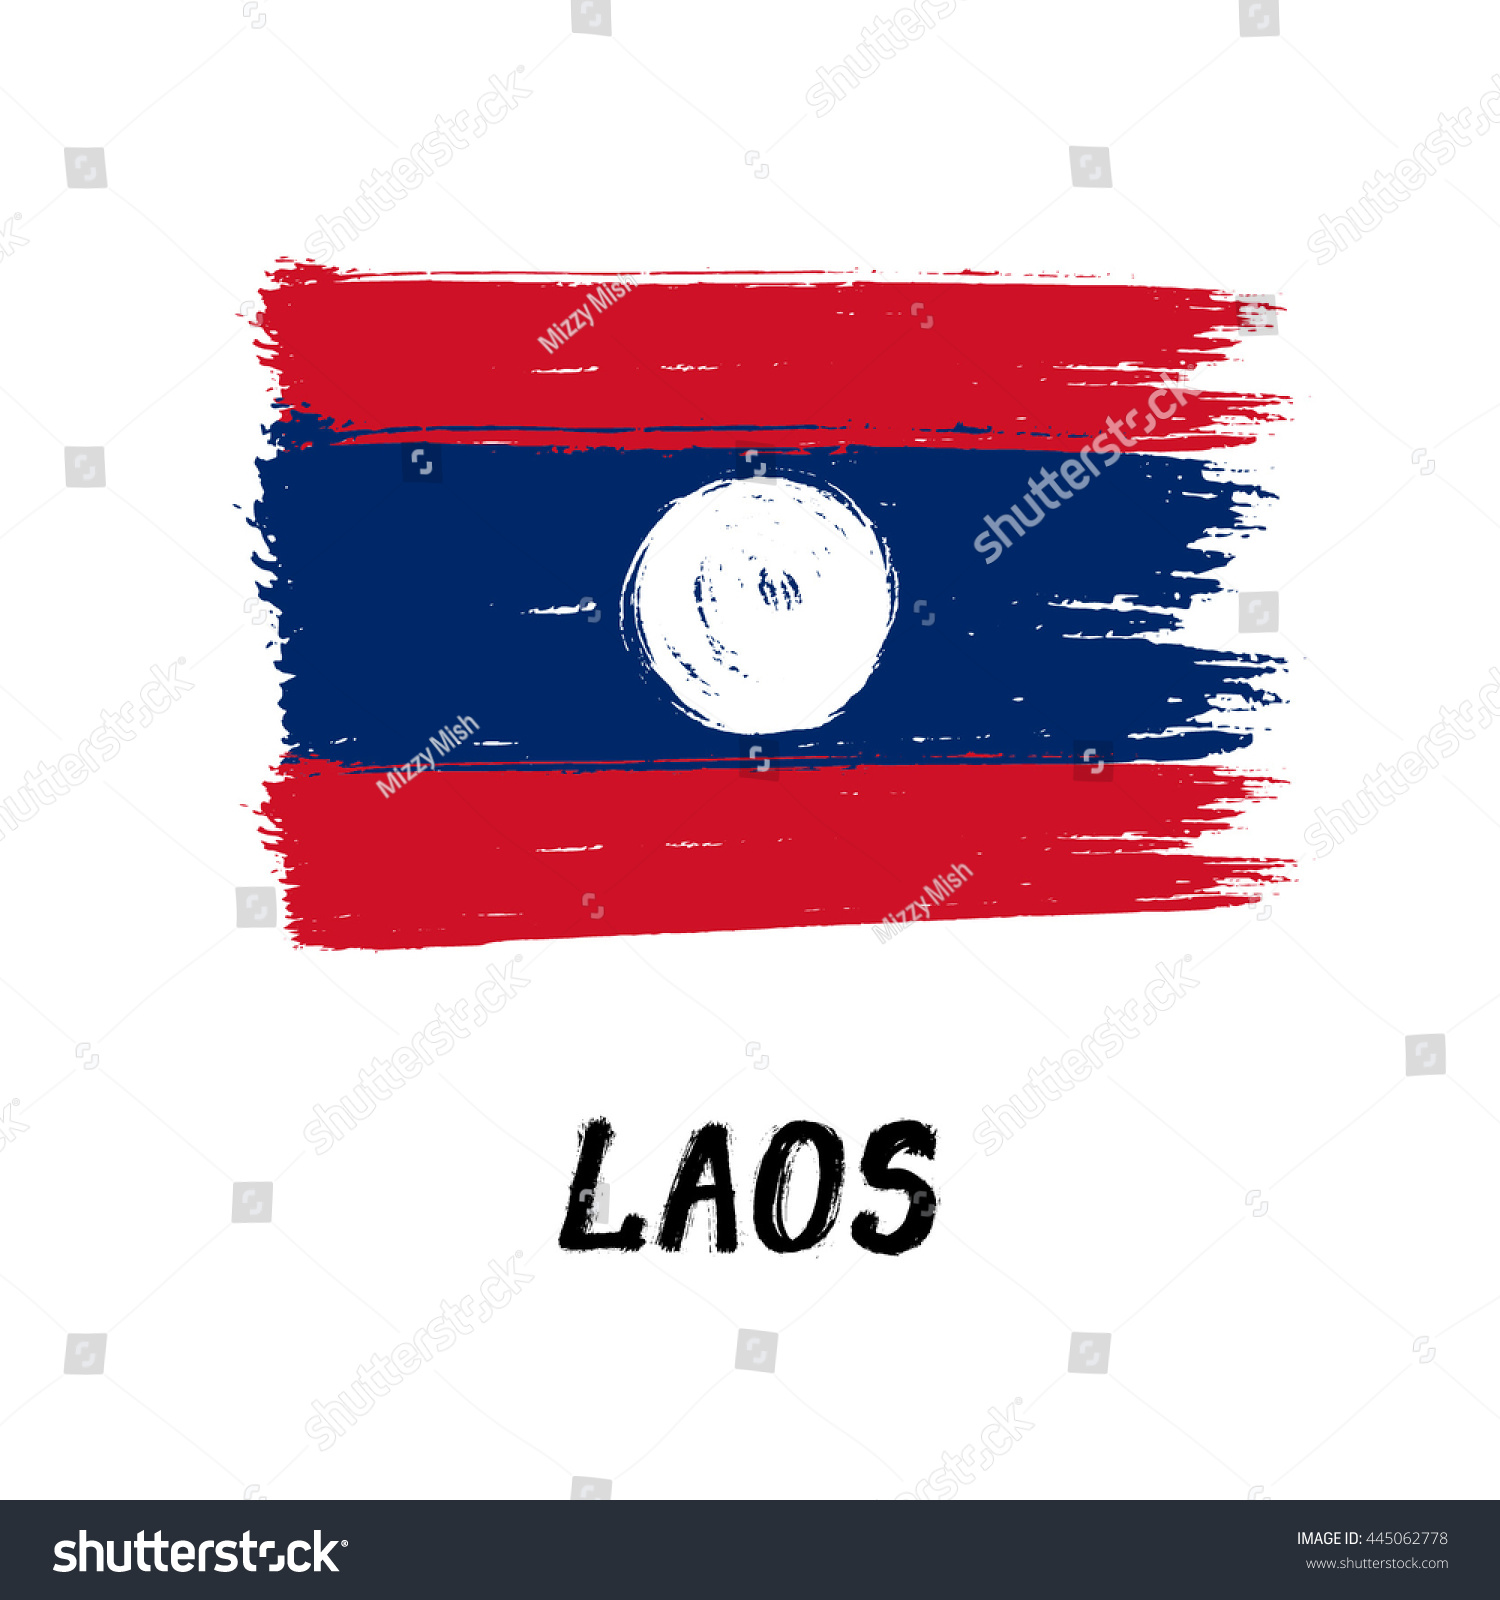 Flag Laos Grunge Vectores En Stock 445062778 - Shutterstock